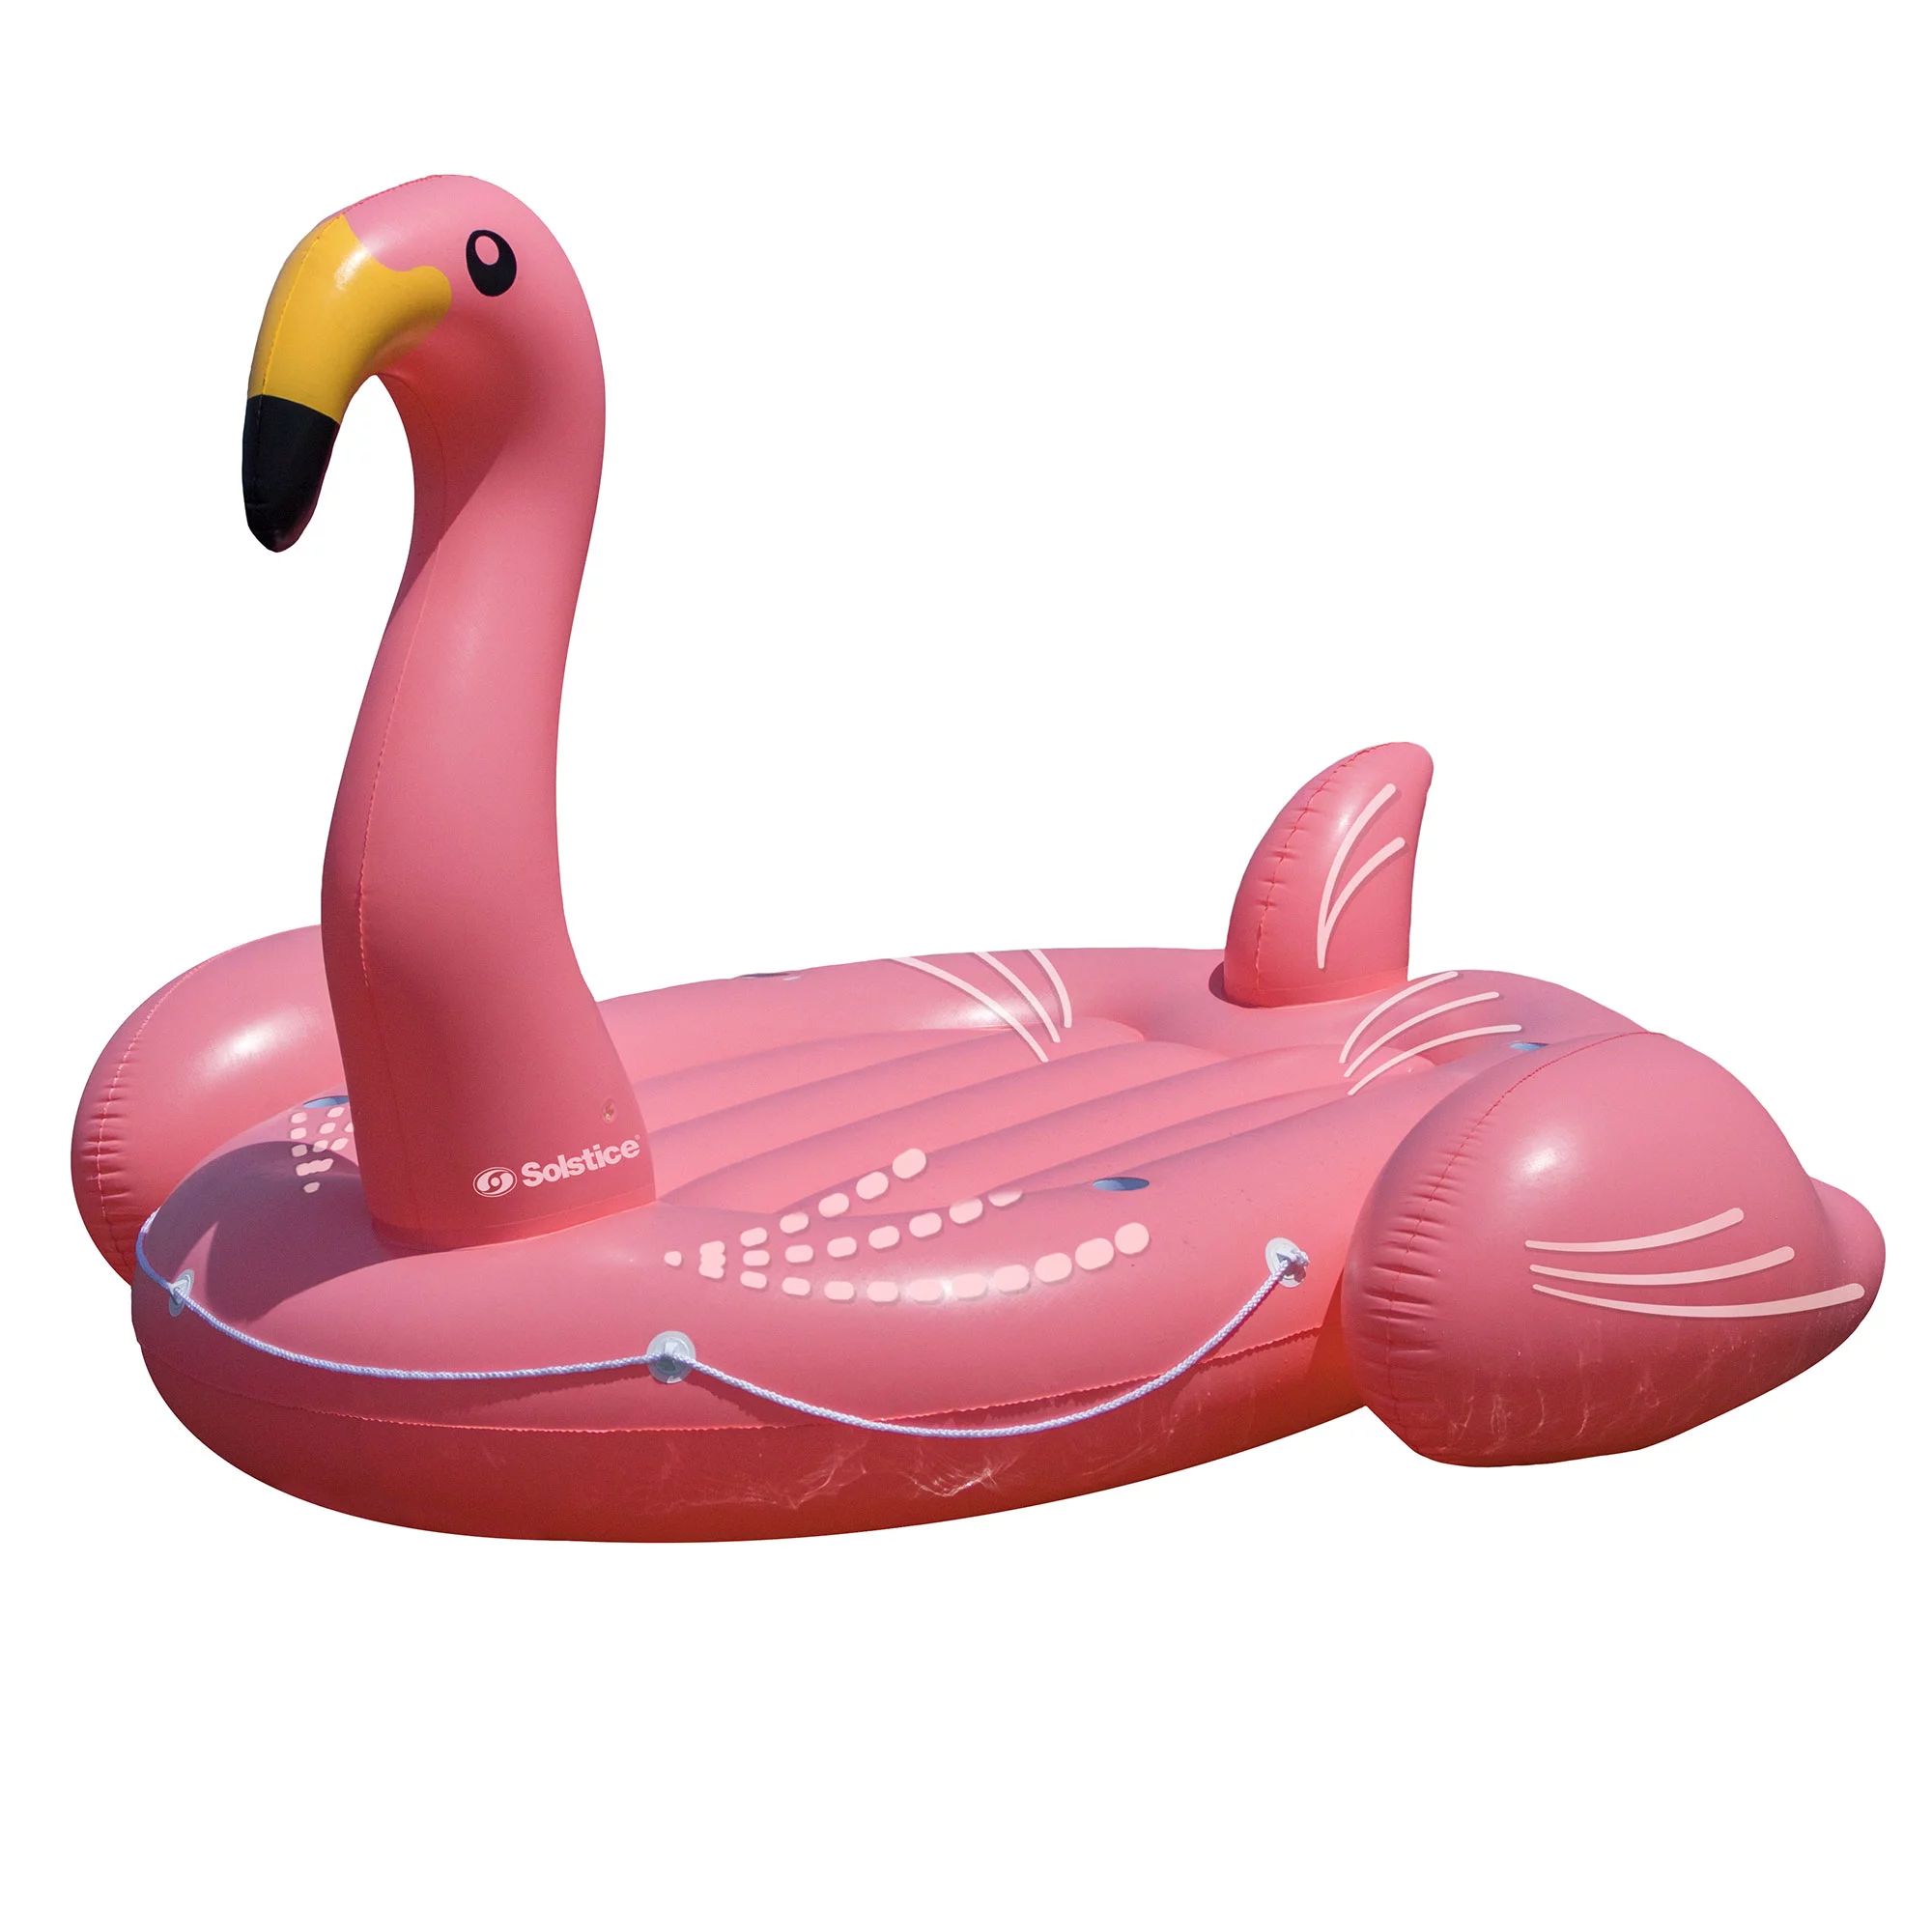 Swimline Vinyl Biggest Giant Inflatable Ride On Solstice Pool Float, Pink | Walmart (US)